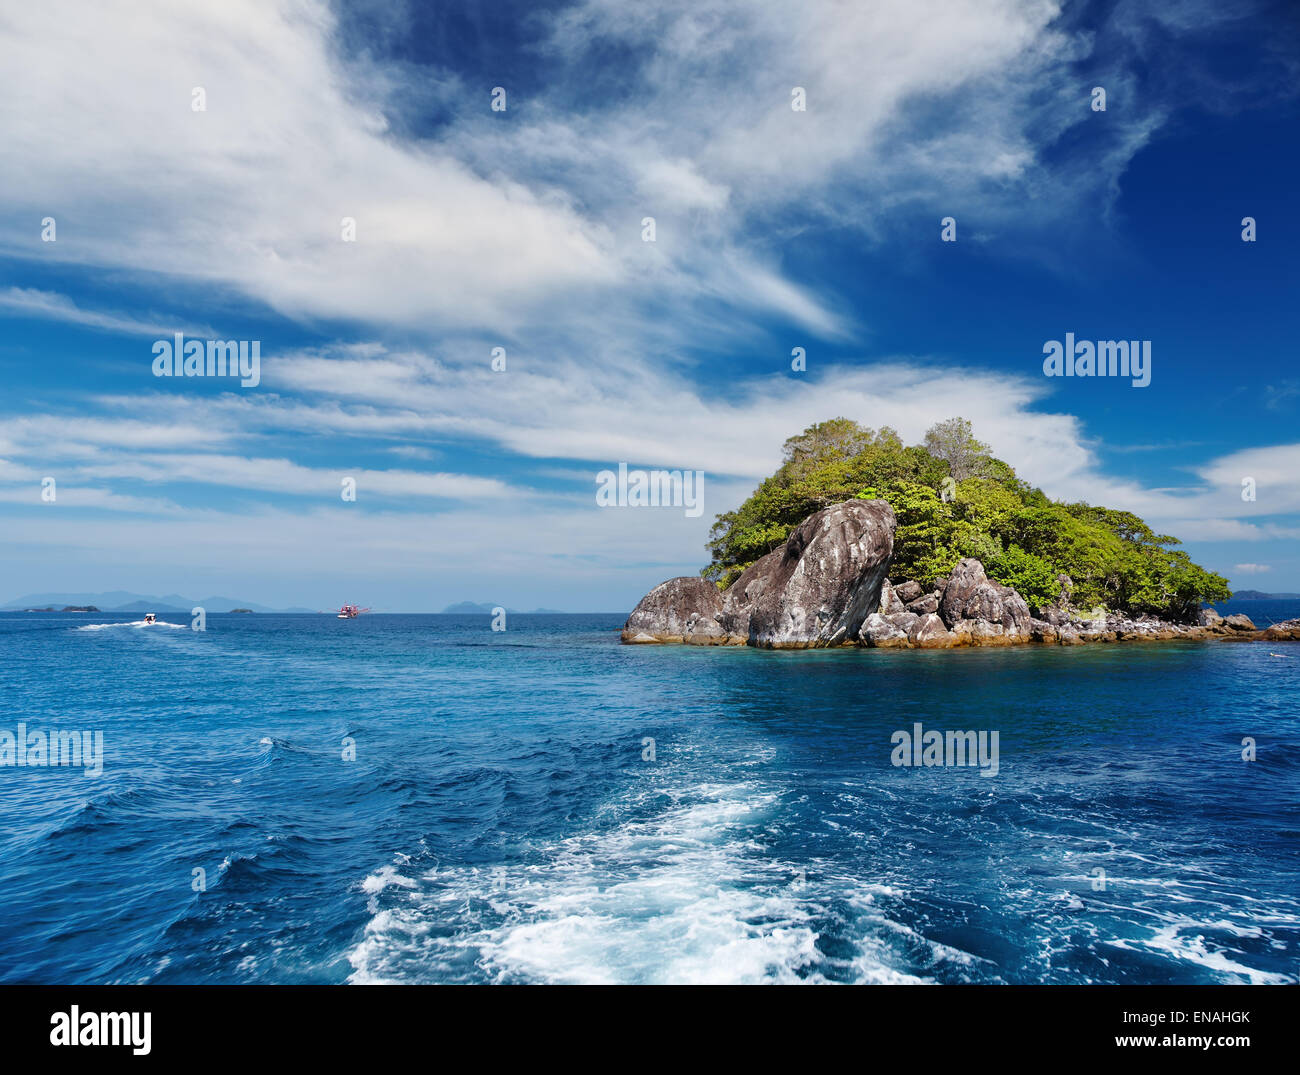 Tropical islands, Trat archipelago, Thailand Stock Photo